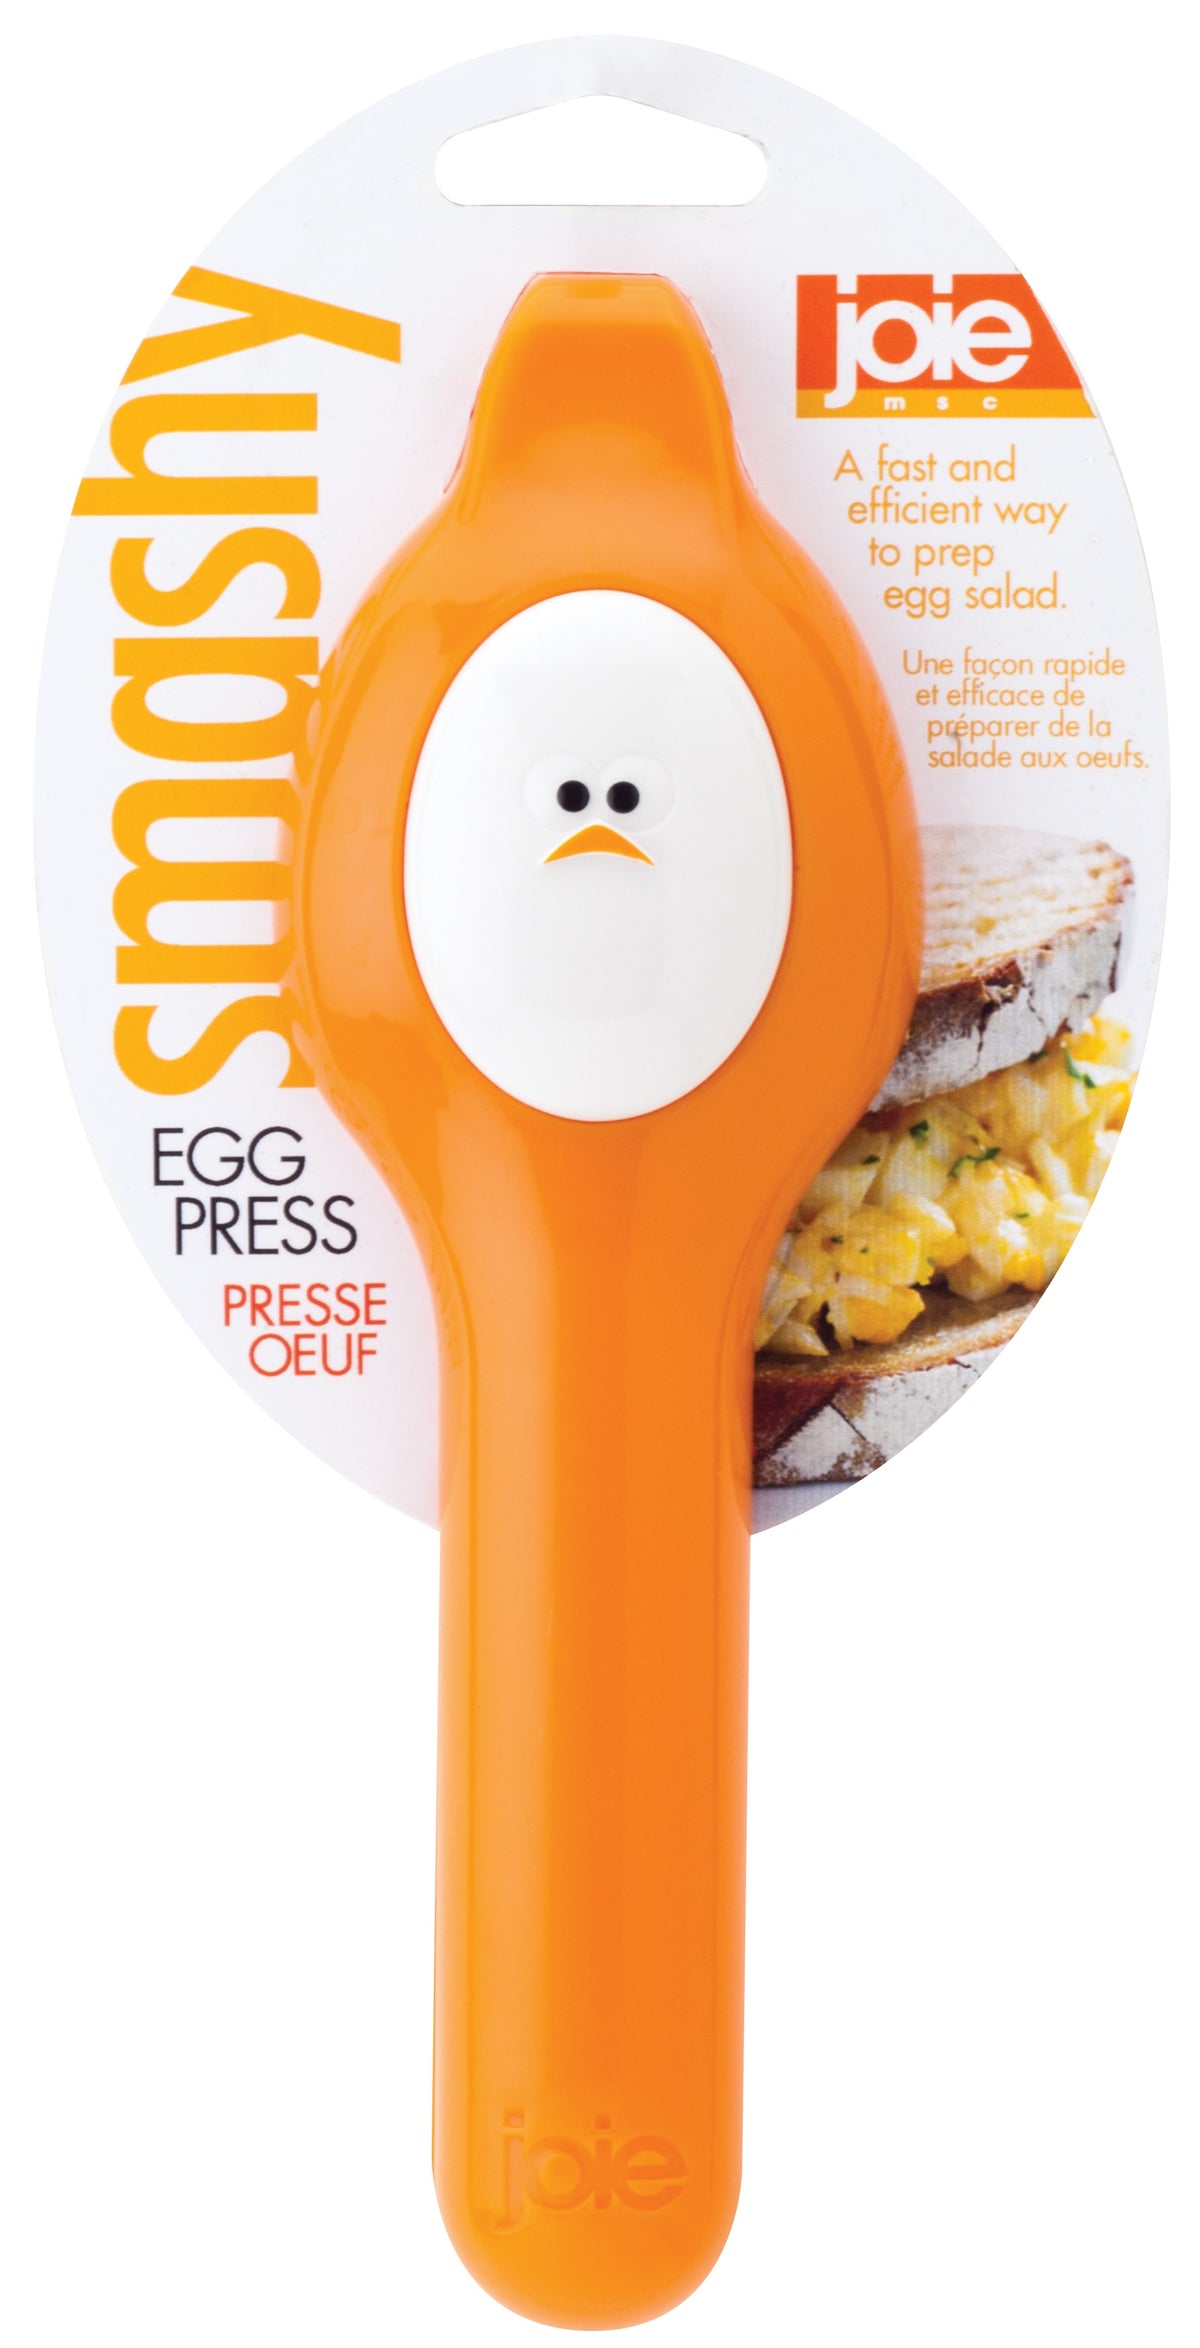 Joie MSC 30202 Smashy Egg Press, Orange, Plastic